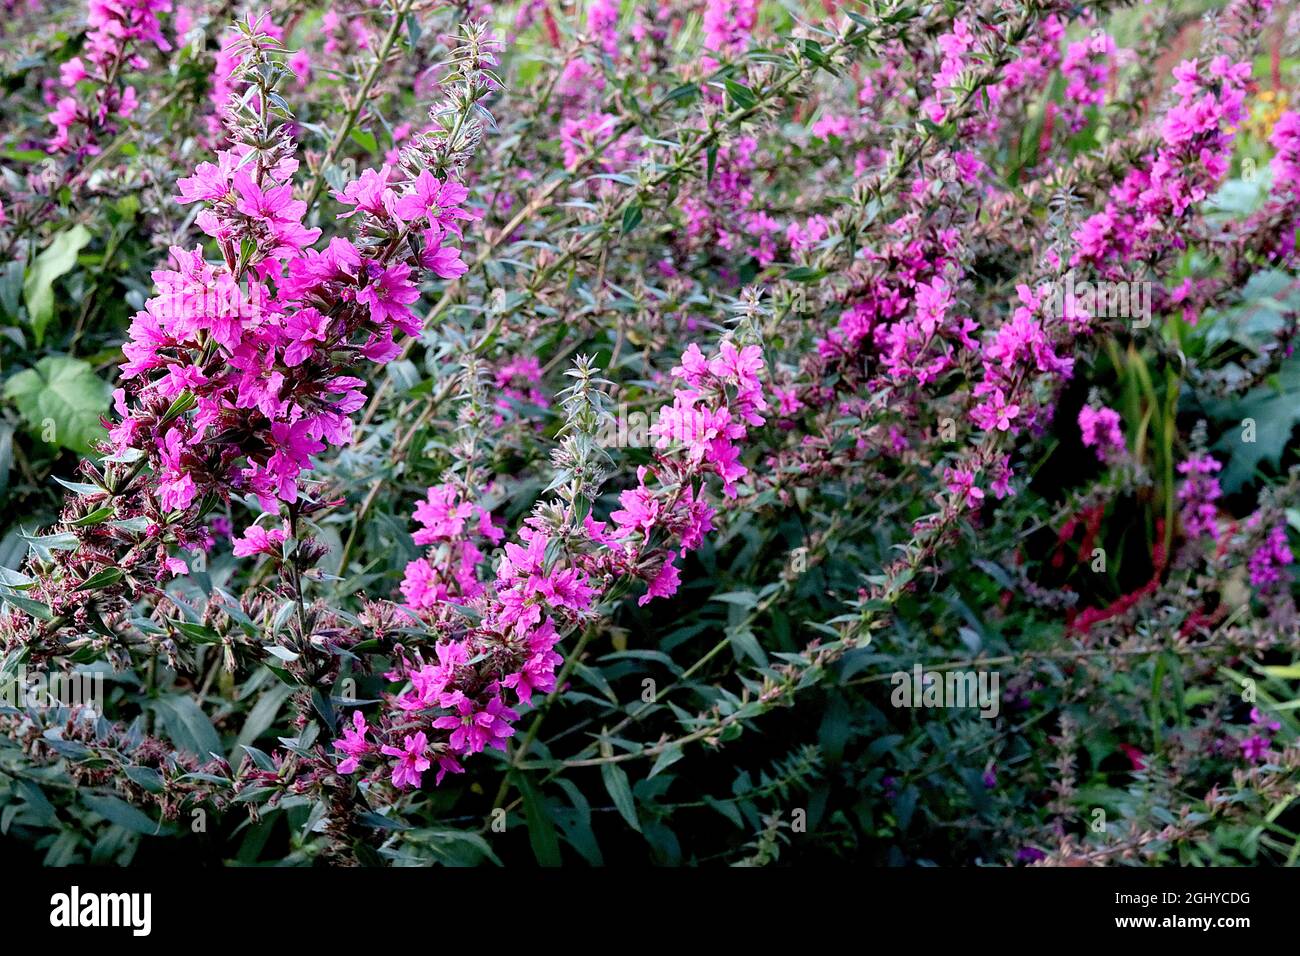 Lythrum virgatum ‘Feuerkerze’ purple / wand loosestrife Feuerkerze - upright racemes of rose red flowers and tiny grey green lance-shaped leaves,  UK Stock Photo